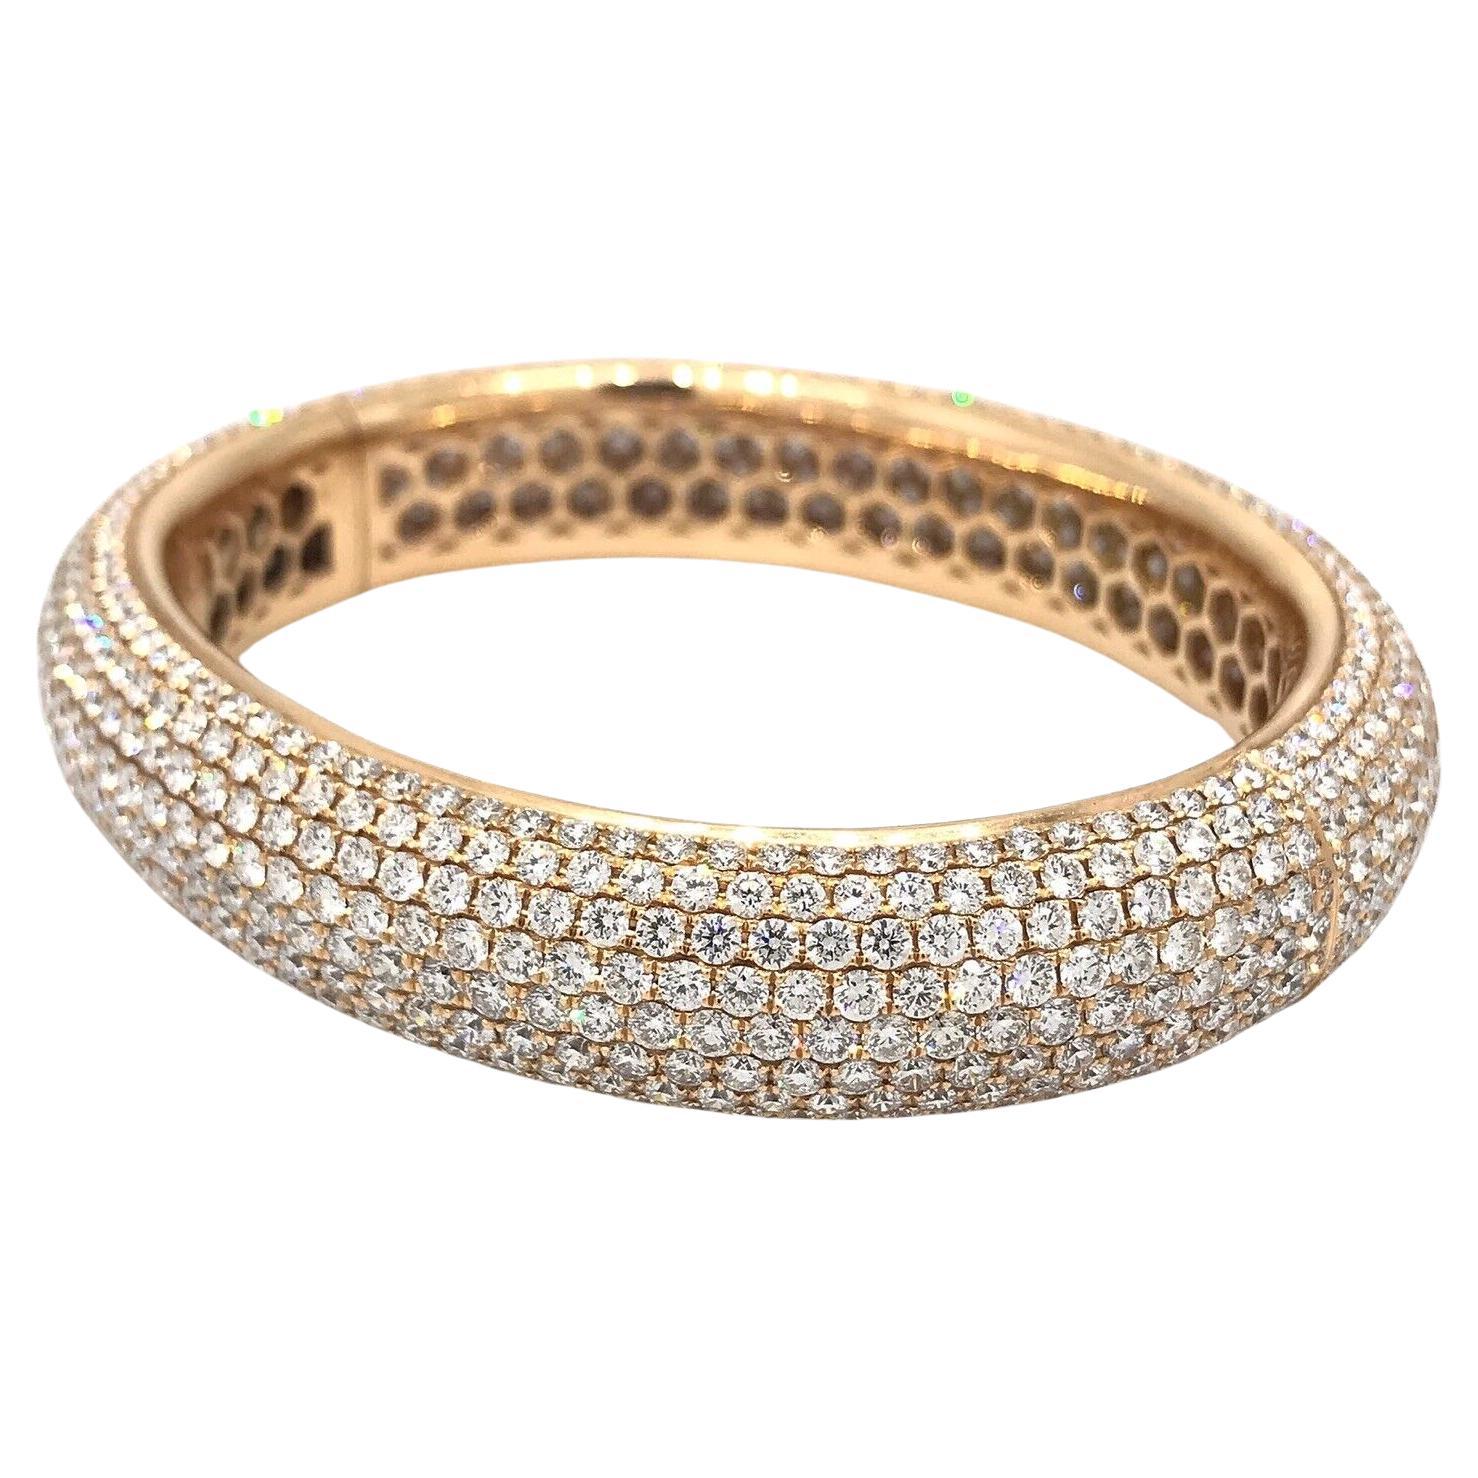 24.25 Carats Diamond Pave Bangle Bracelet in 18k Rose Gold For Sale